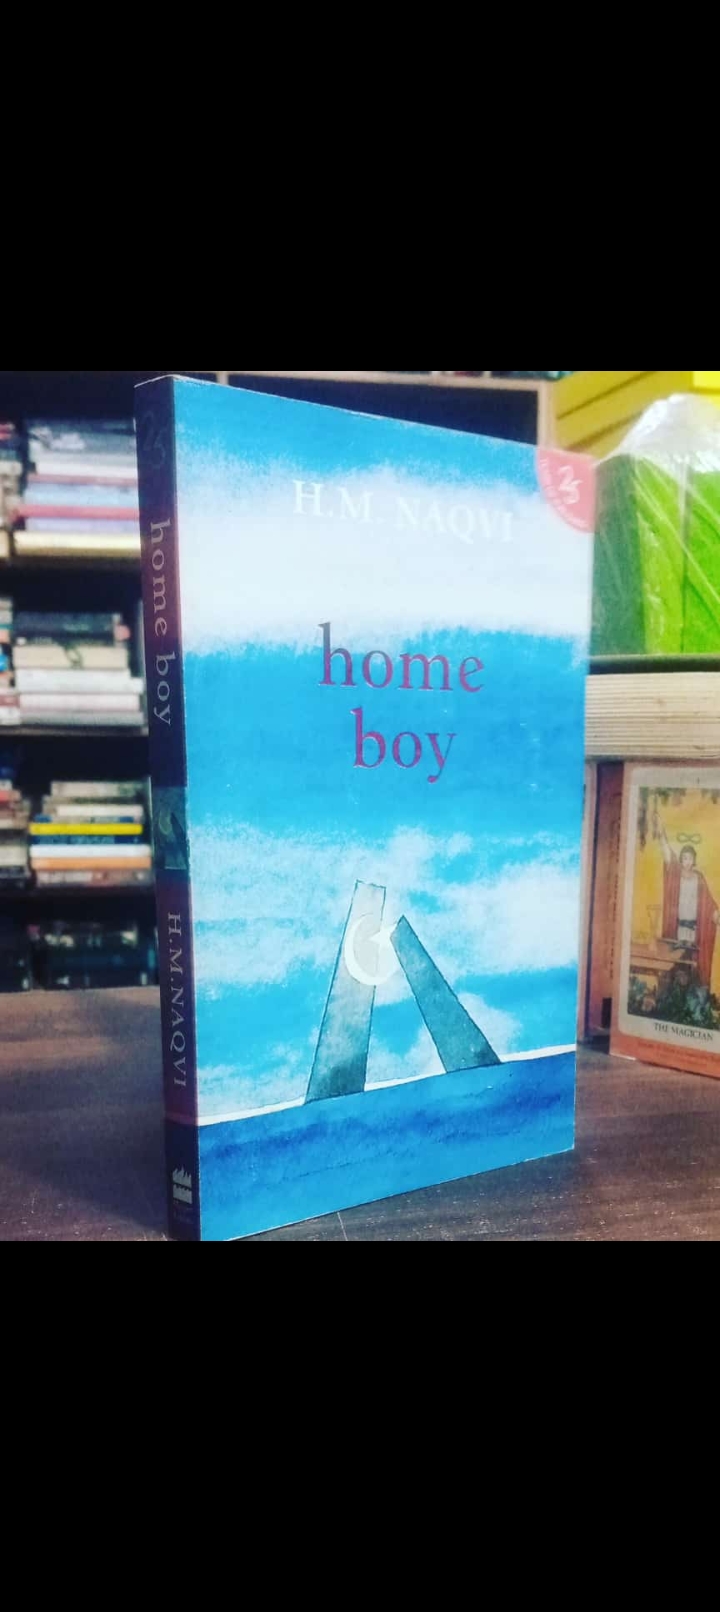 home boy by h.m.naqvi. new original paperback